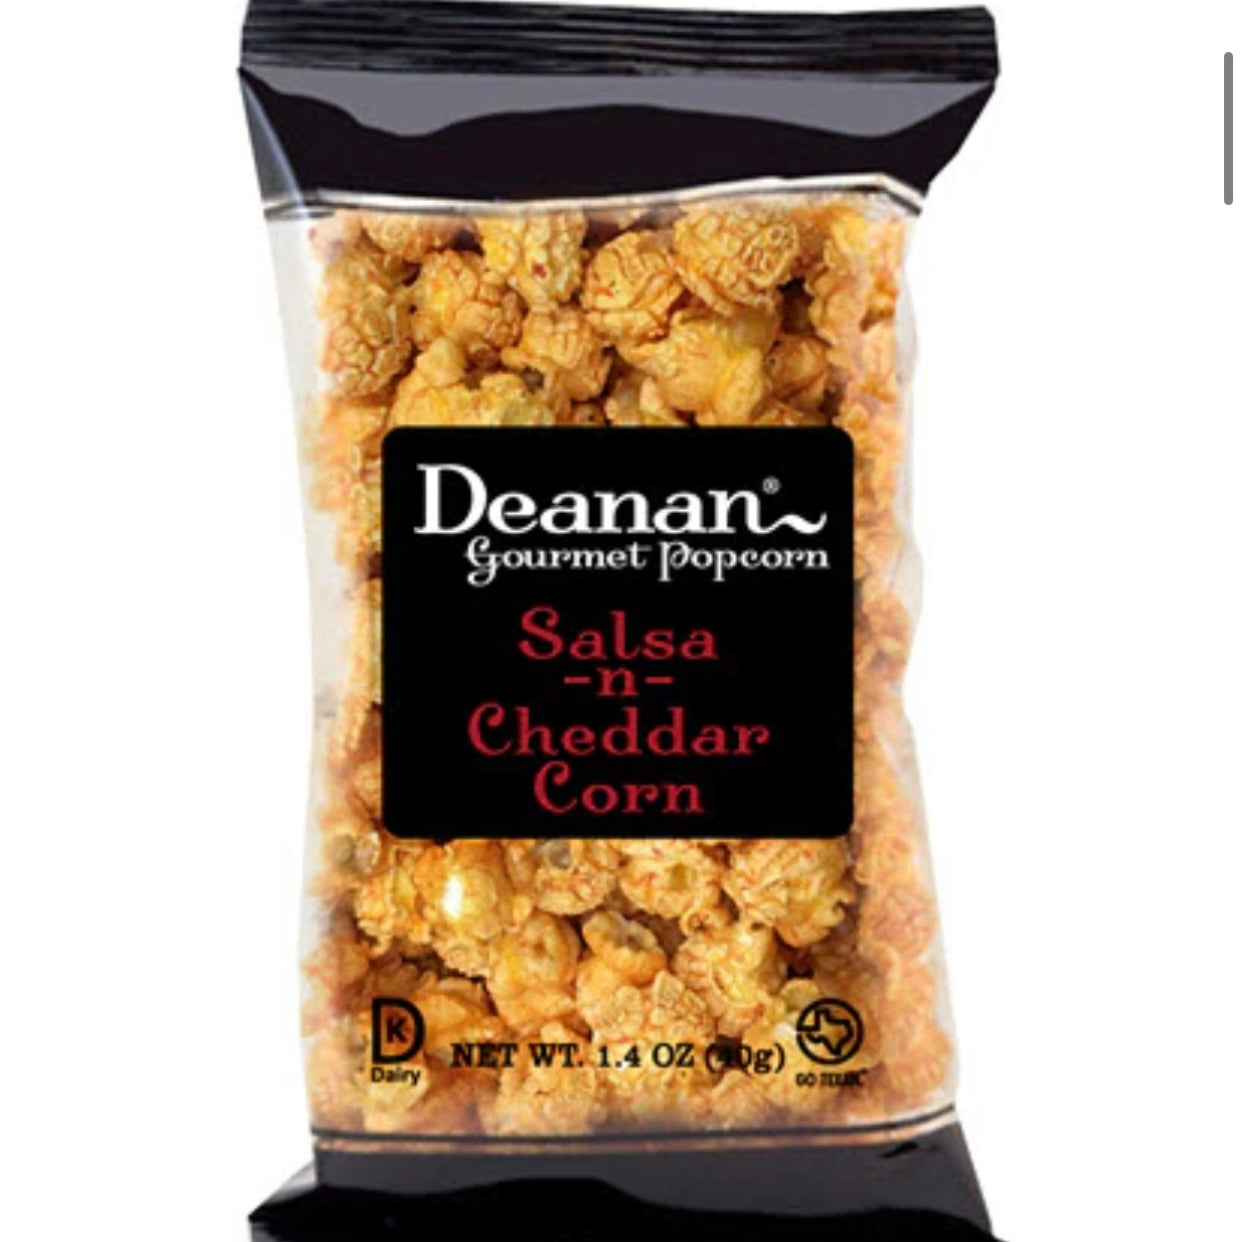 Deanan Gourmet Popcorn